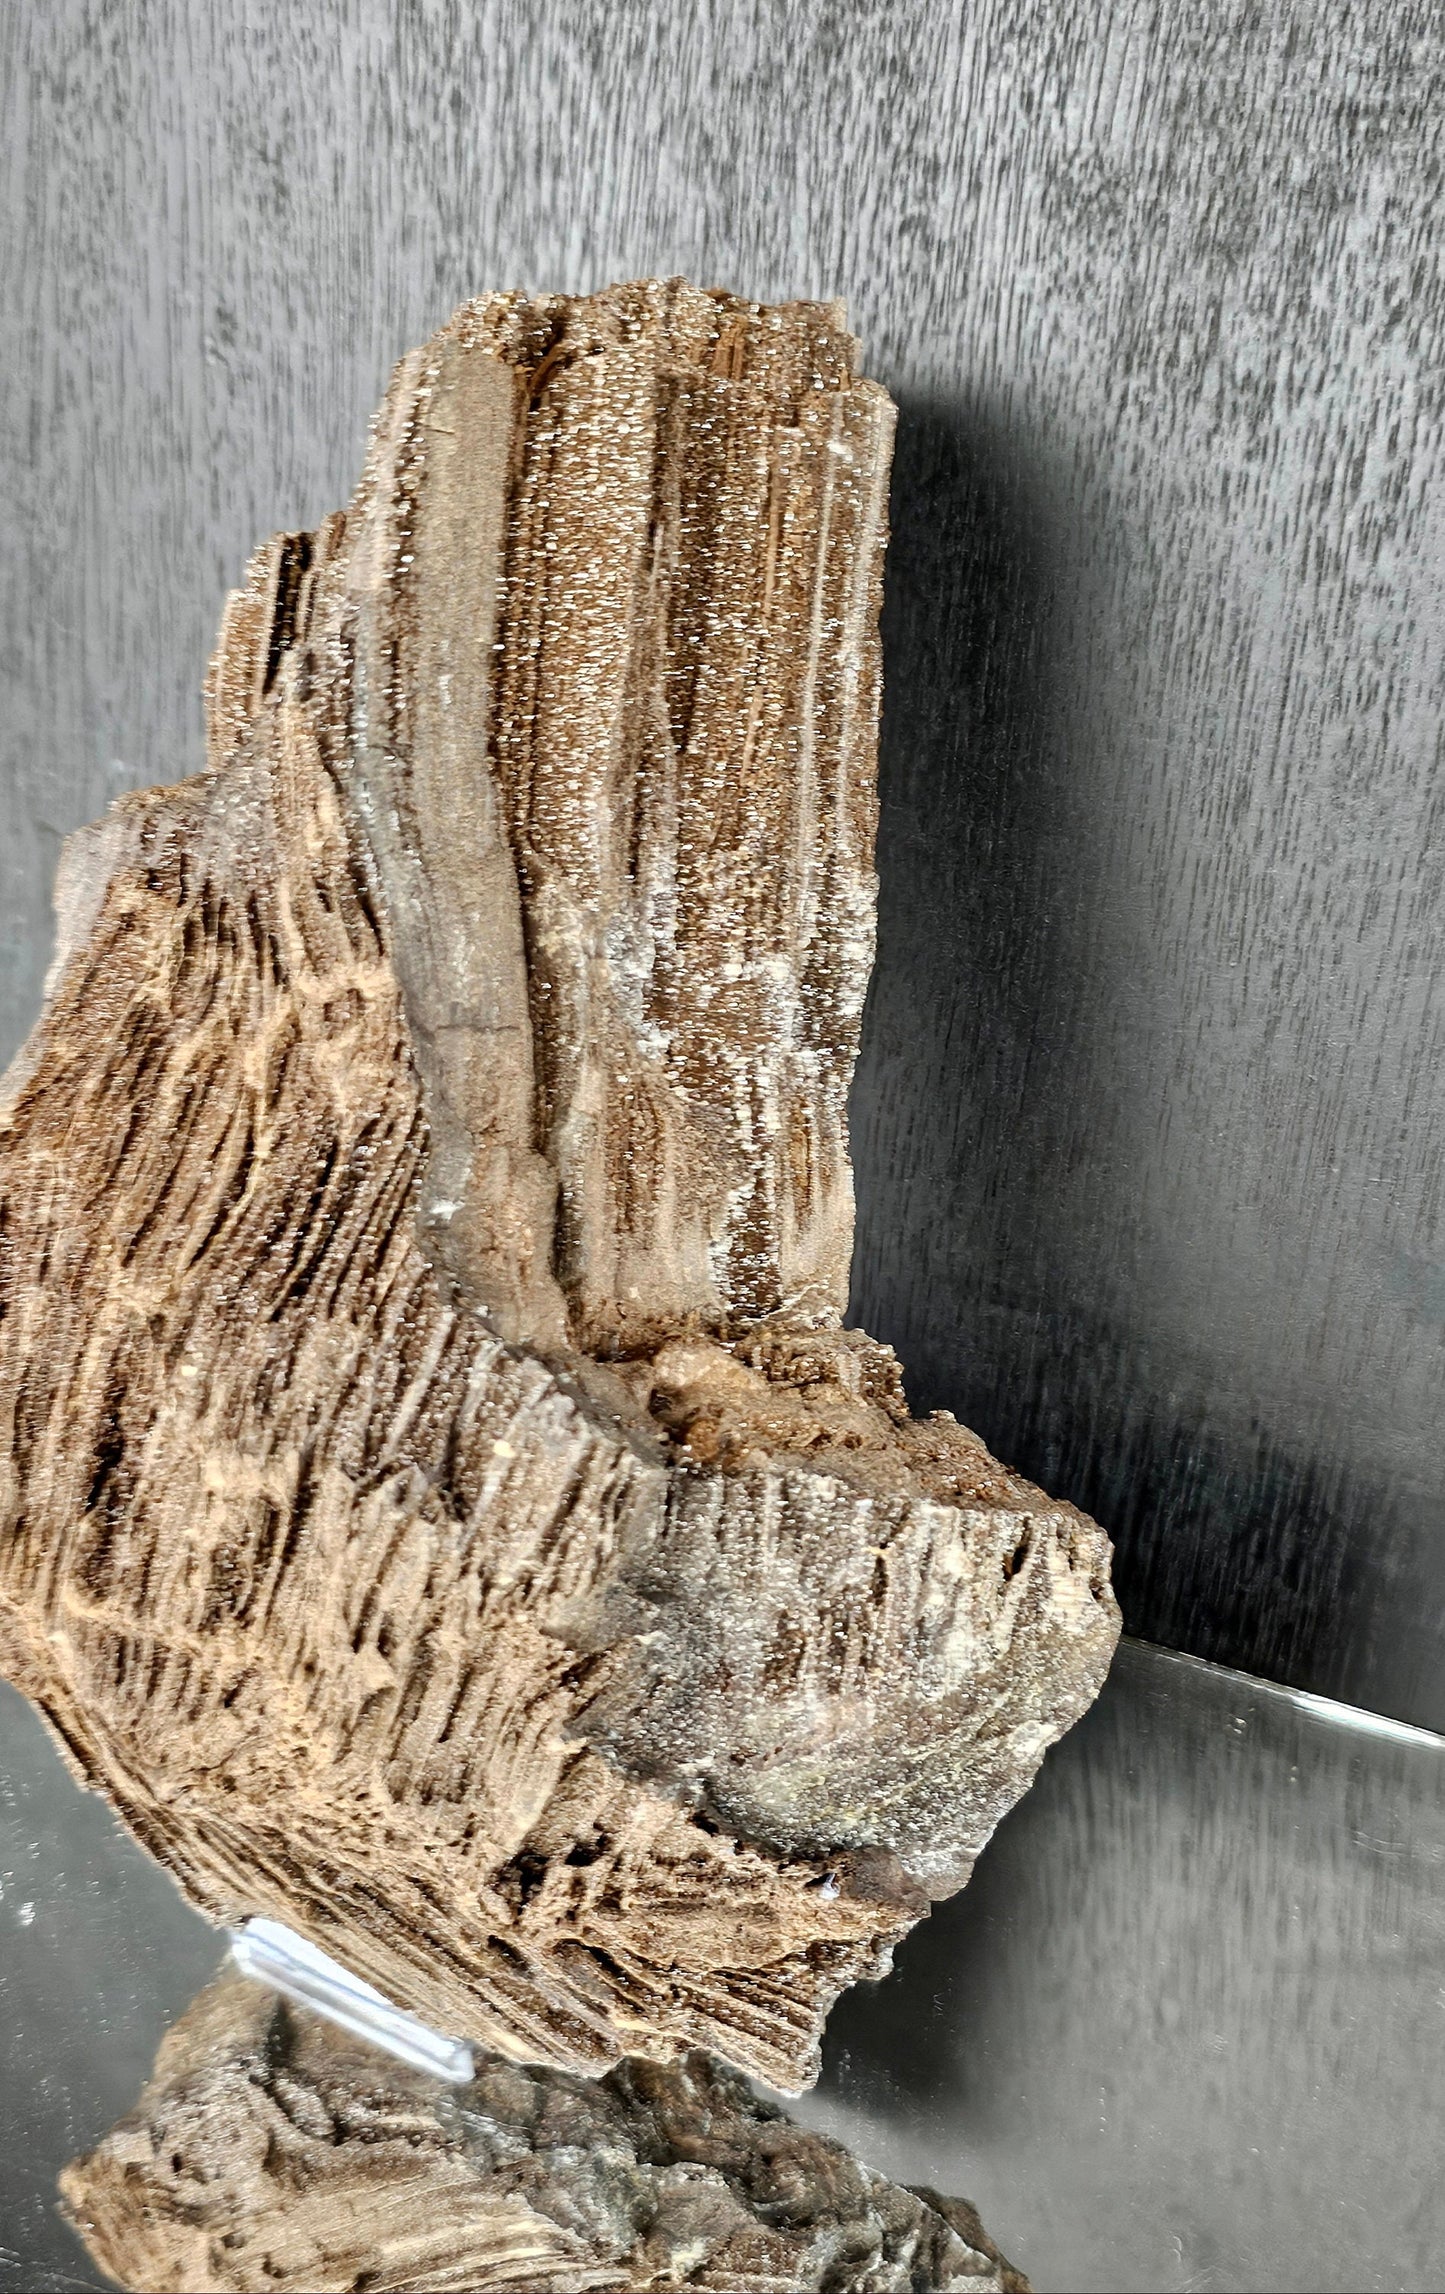 Fossil Wood Quartz Crystal Druze Rare Petrified Wood Germany (#9)